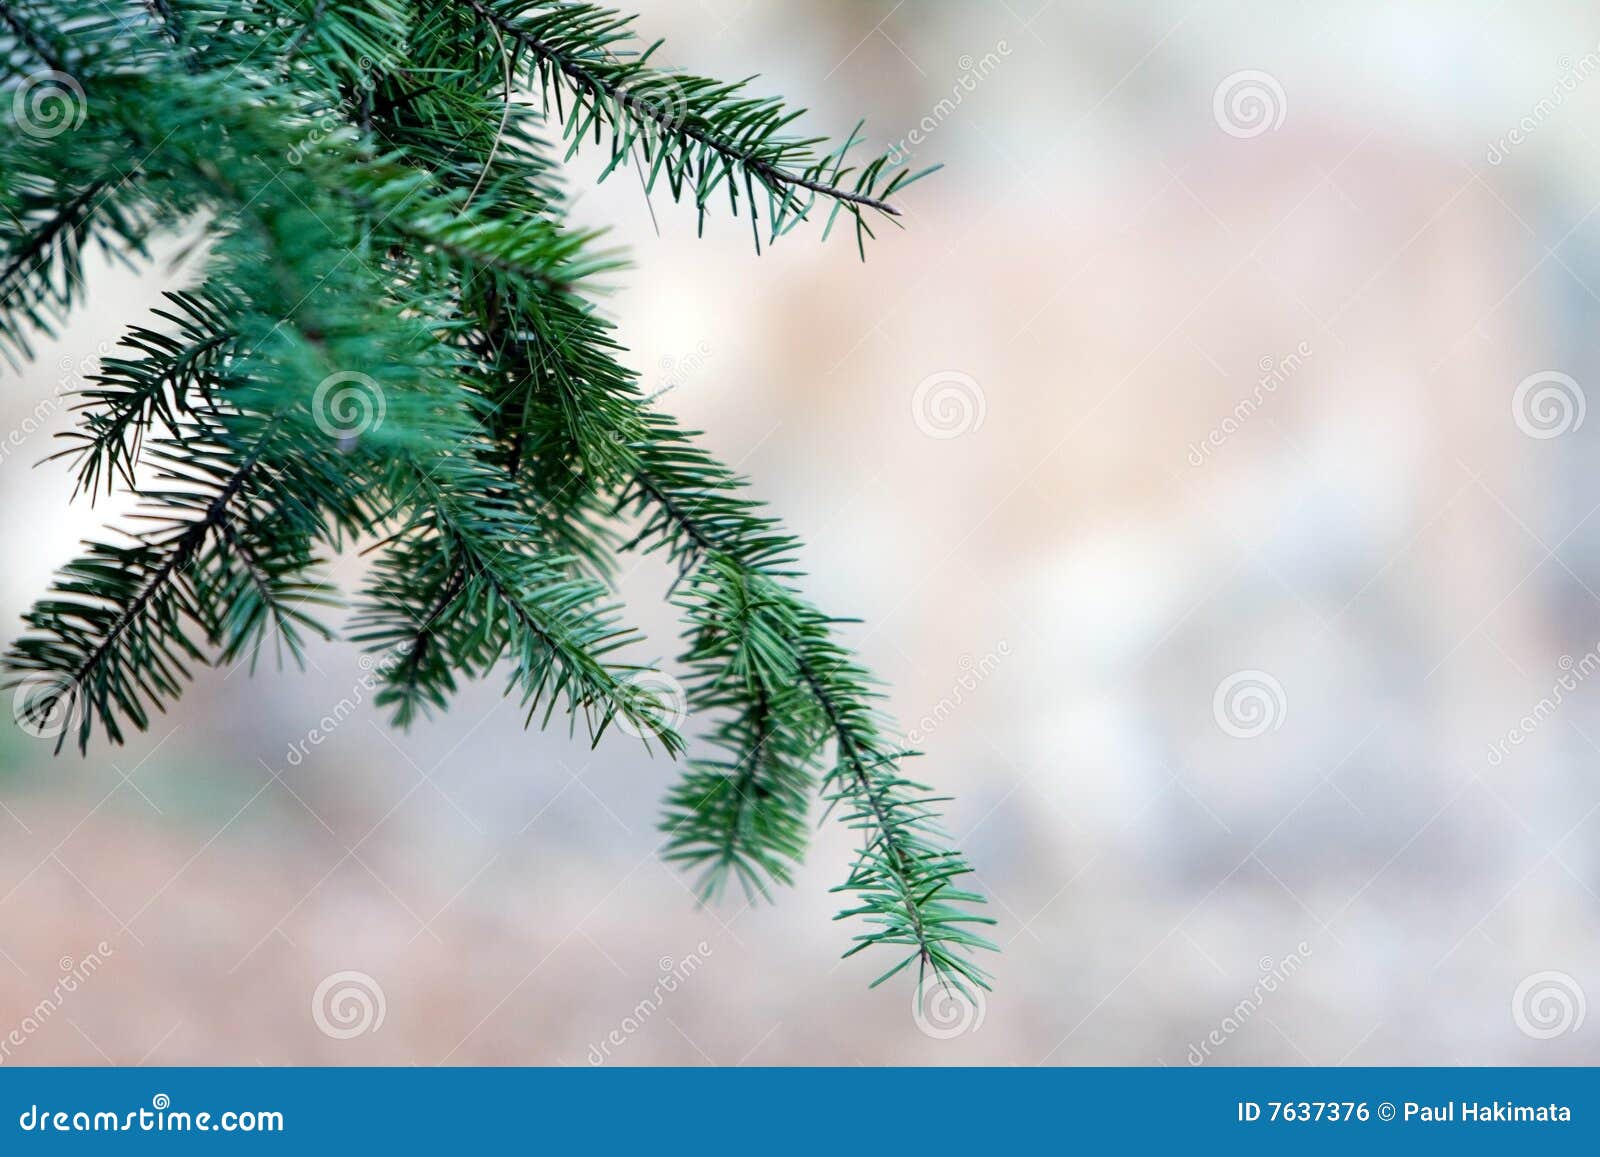 Pine tree branch stock photo. Image of foliage, evergreen - 7637376